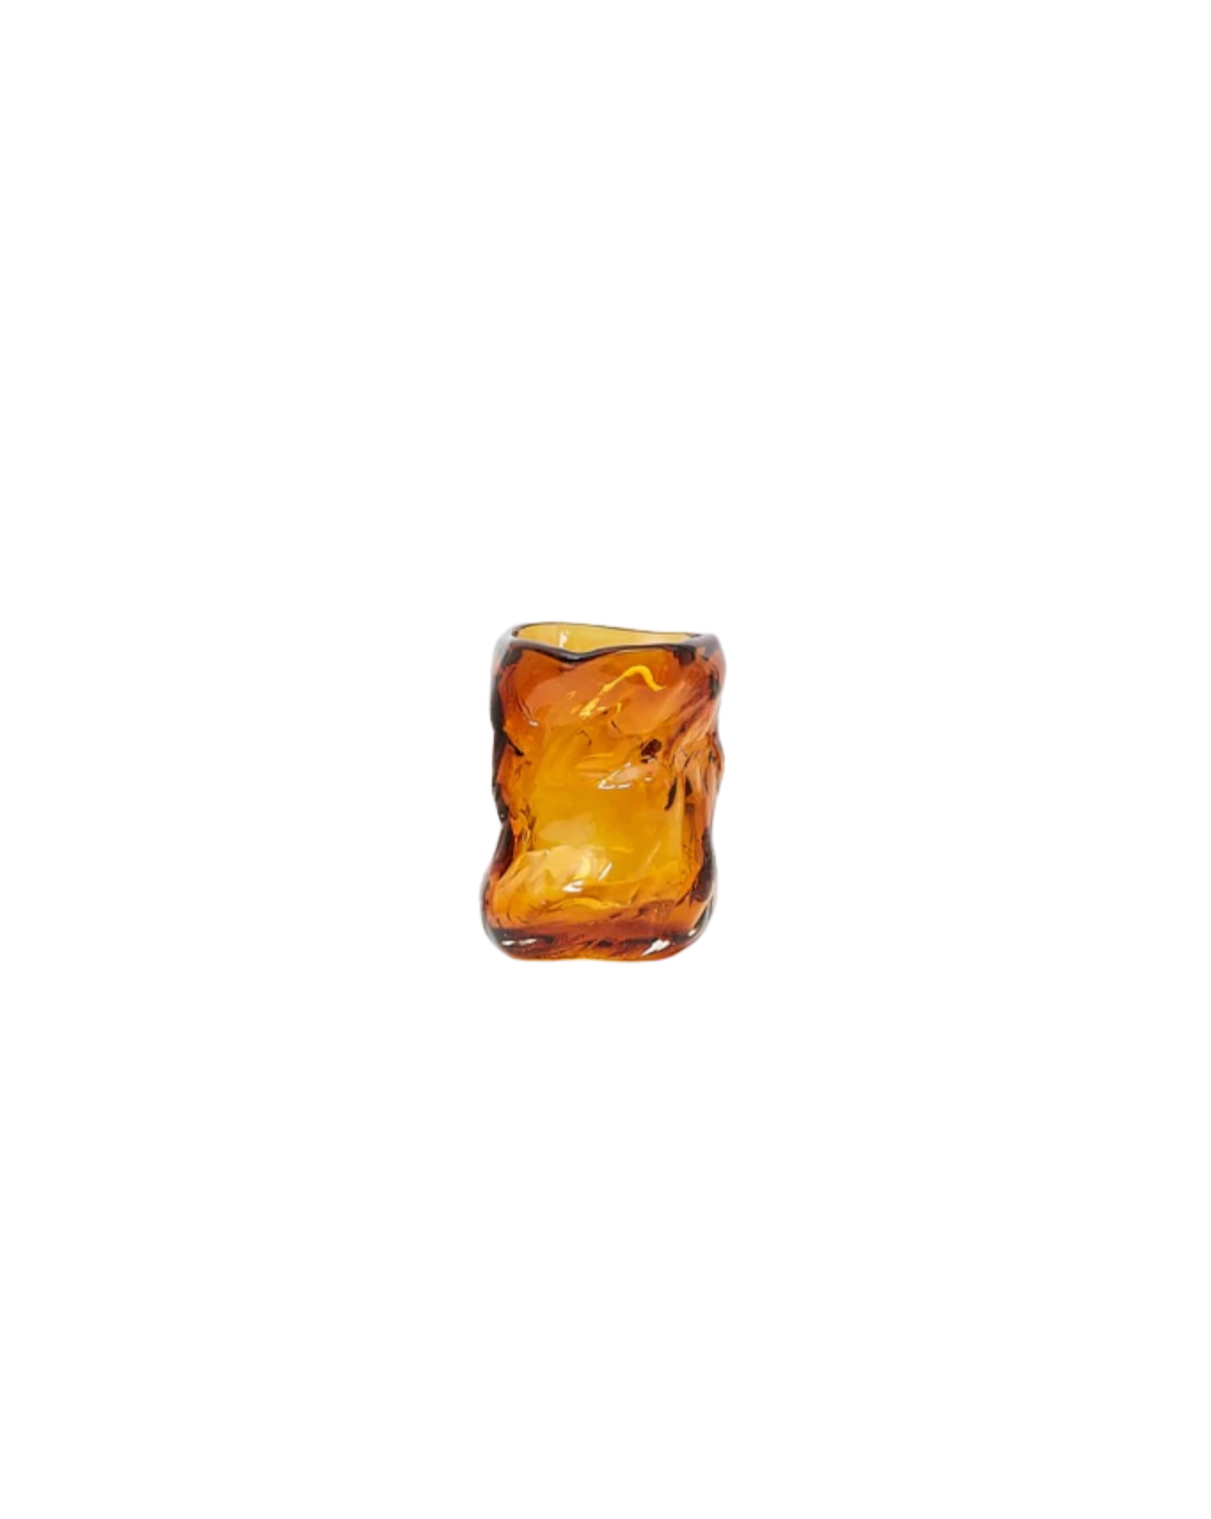 Le verre de murano - marron